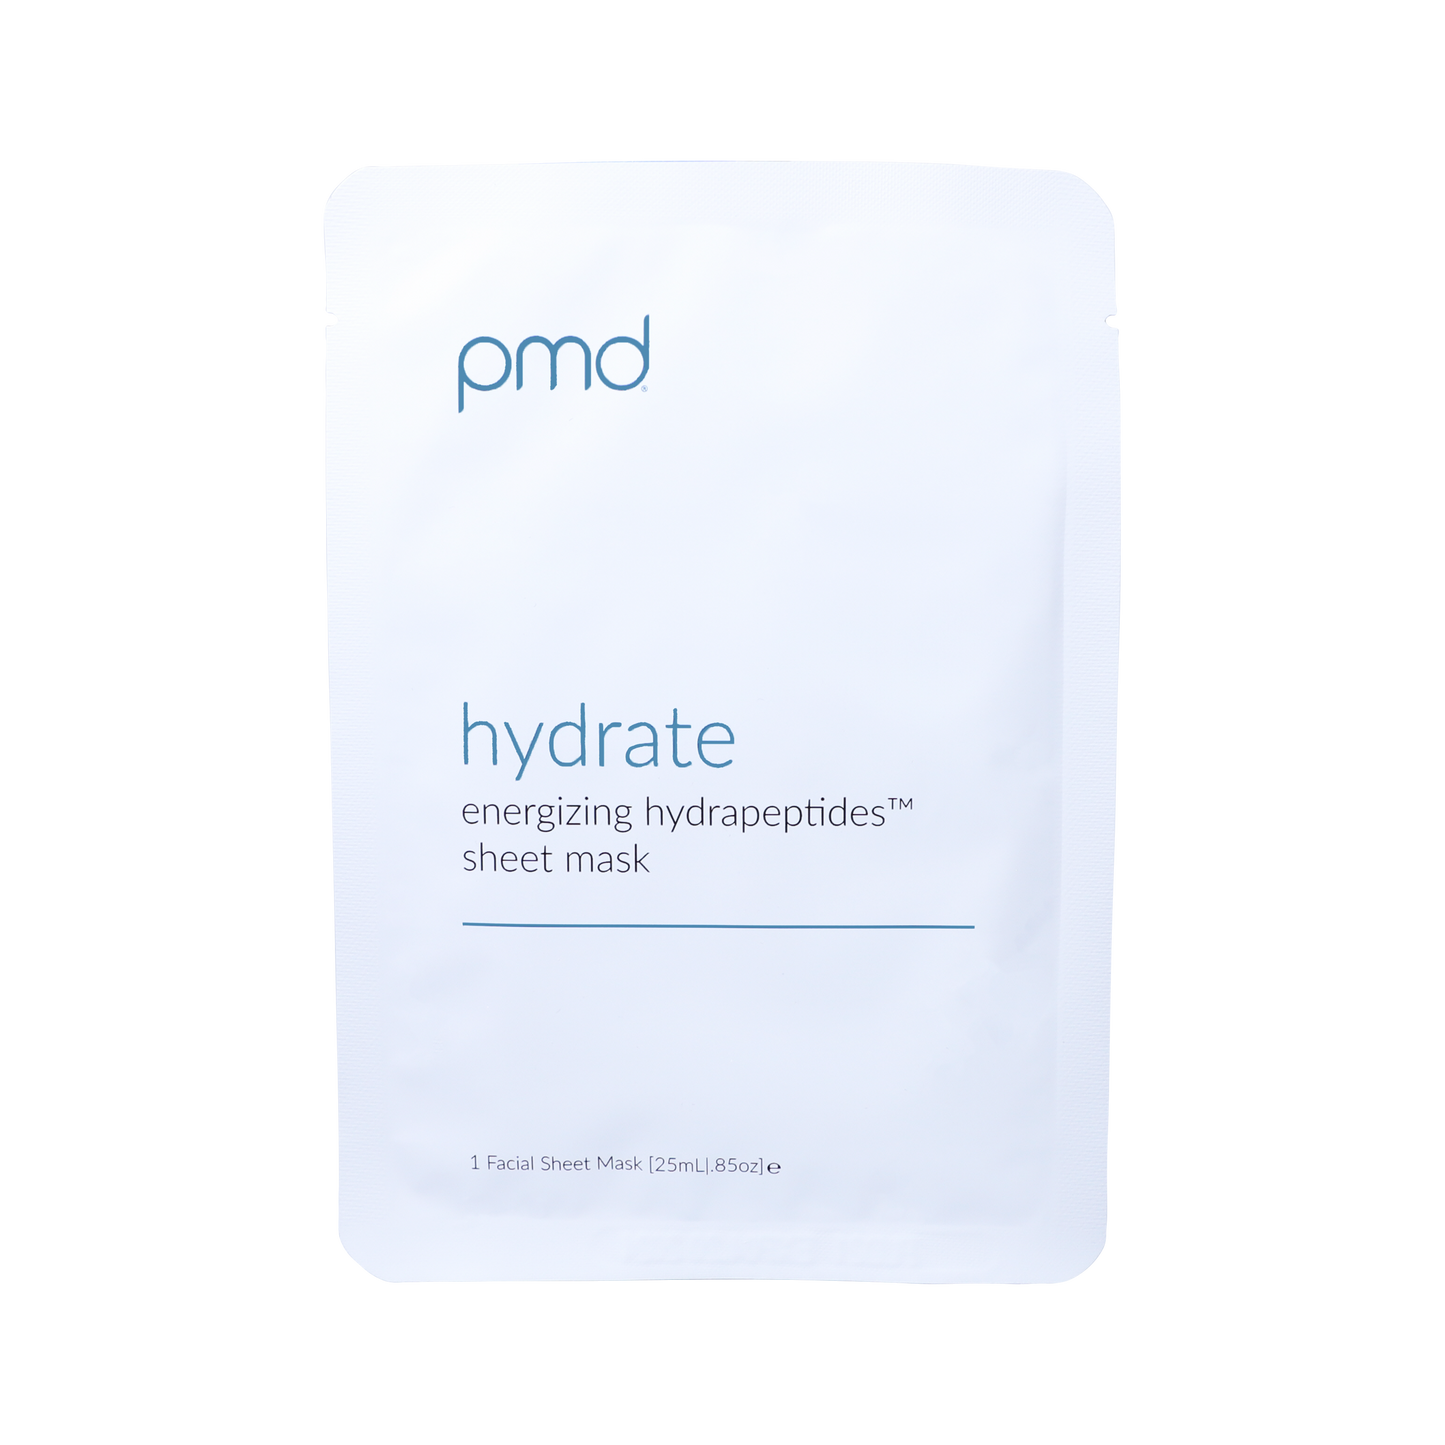 1051-hydrate?Hydrate Energizing HydratingPeptides